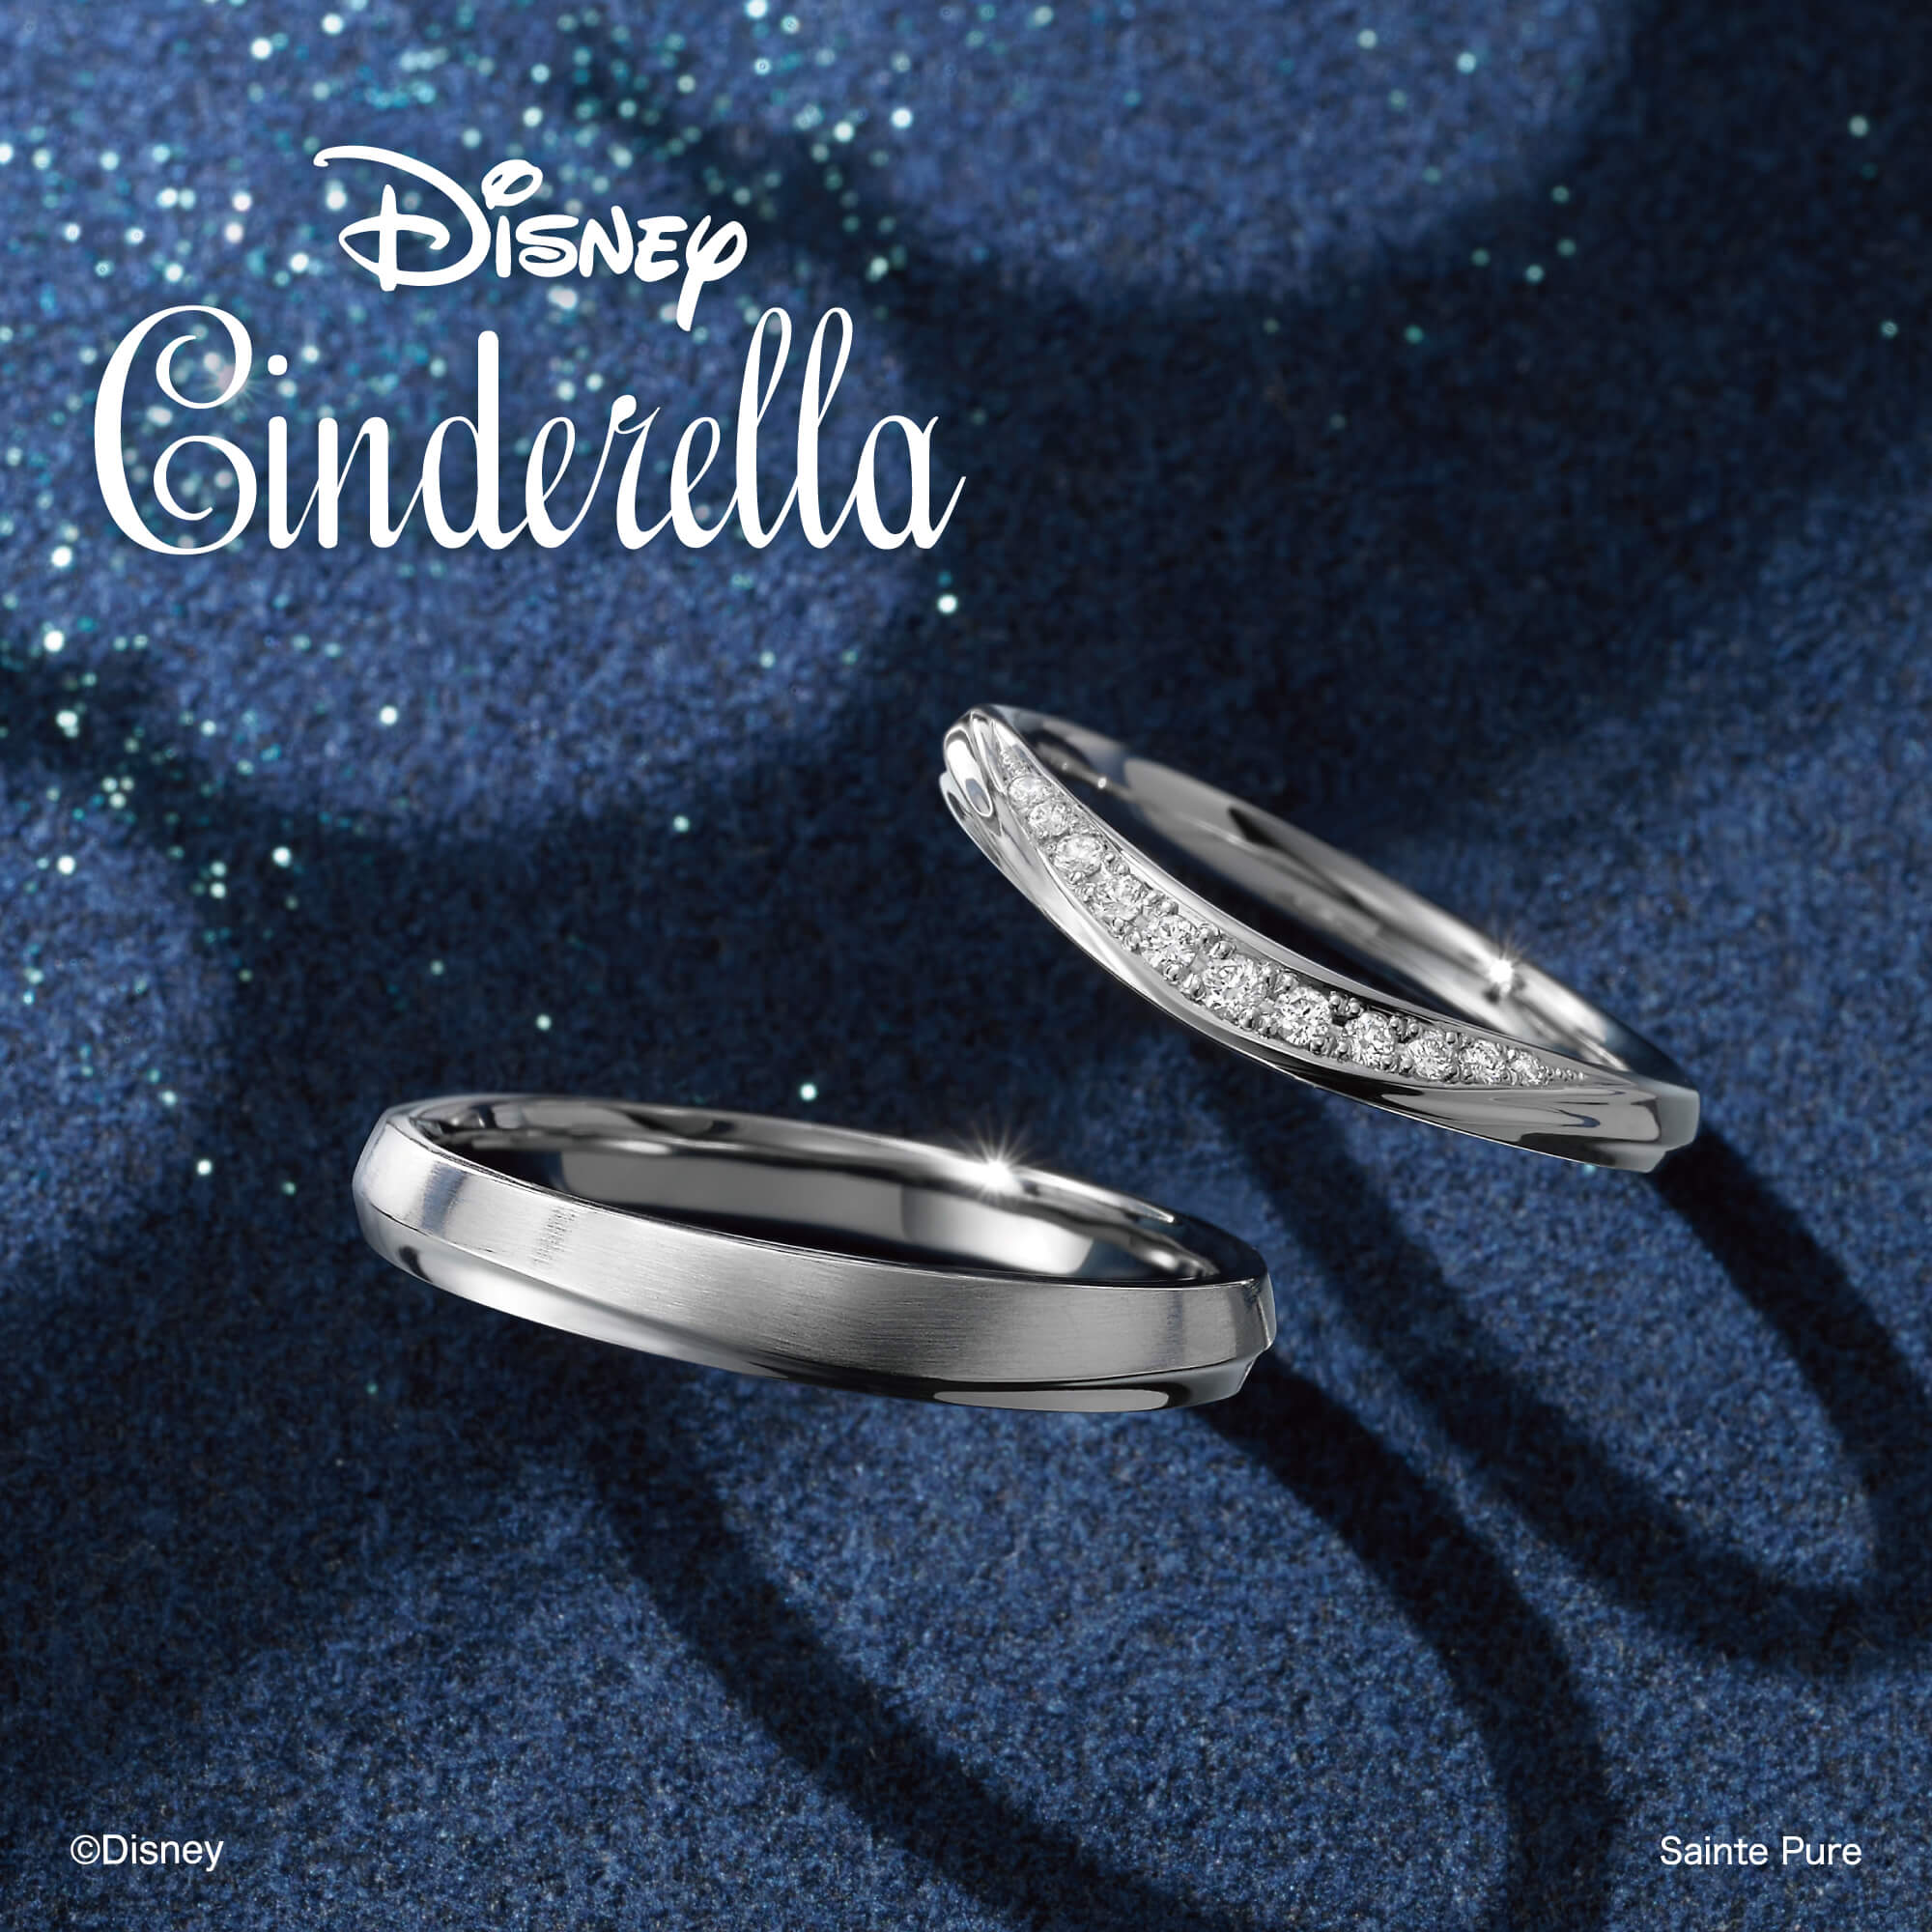 DisneyCinderellaディズニーシンデレラの結婚指輪マリッジリングMarriageringのYou’remyPrincess ユーアーマイプリンセス